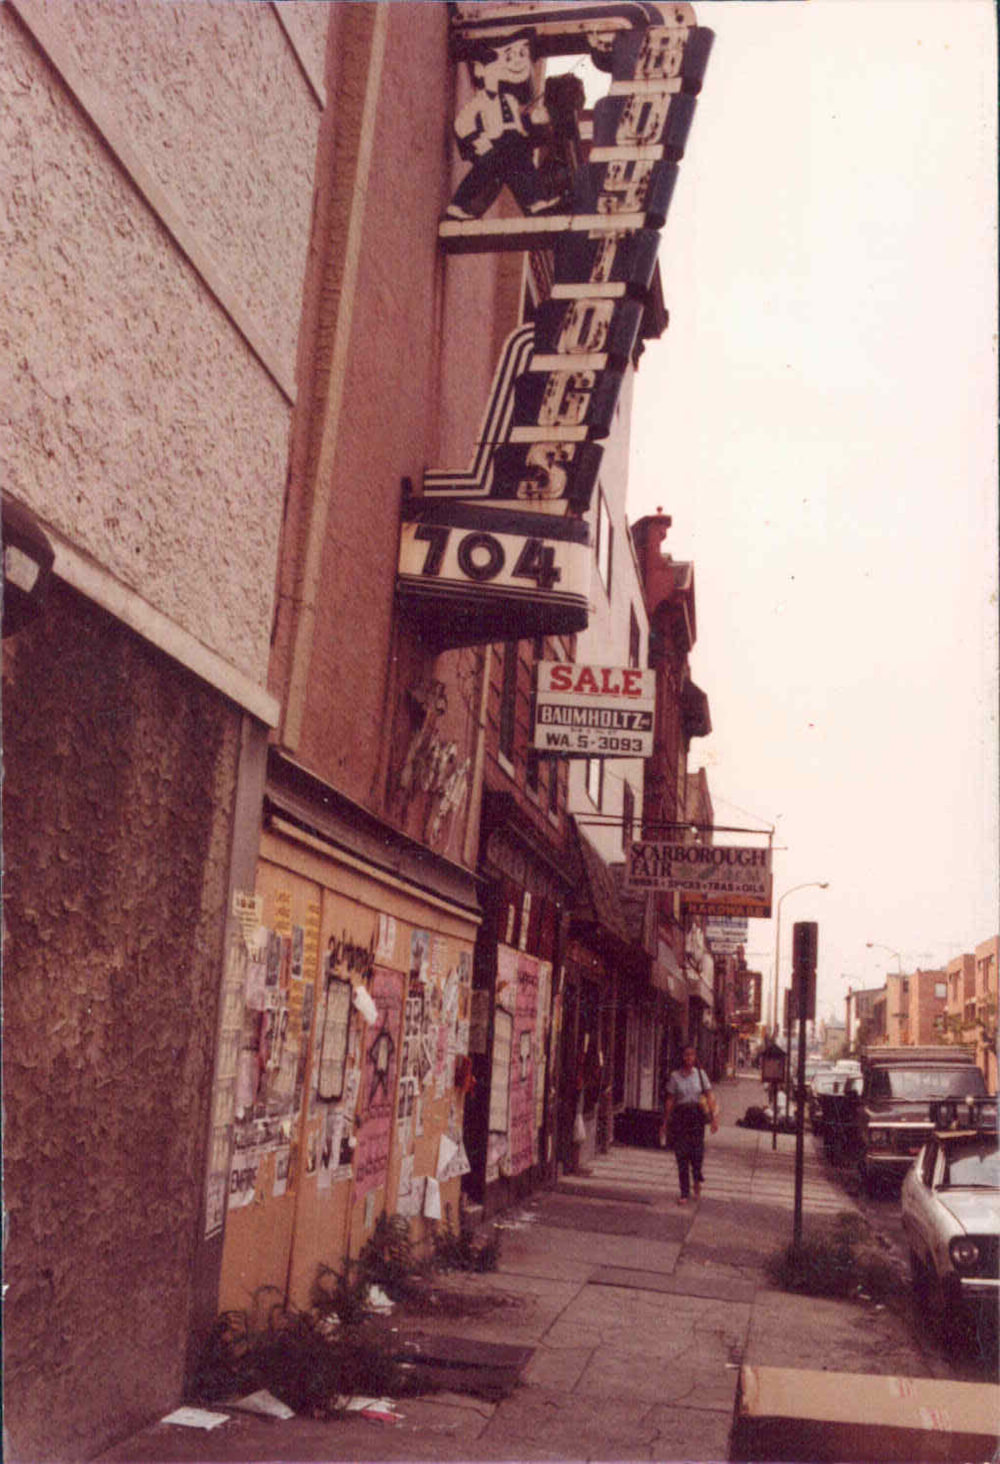 704 South Street, 1980s